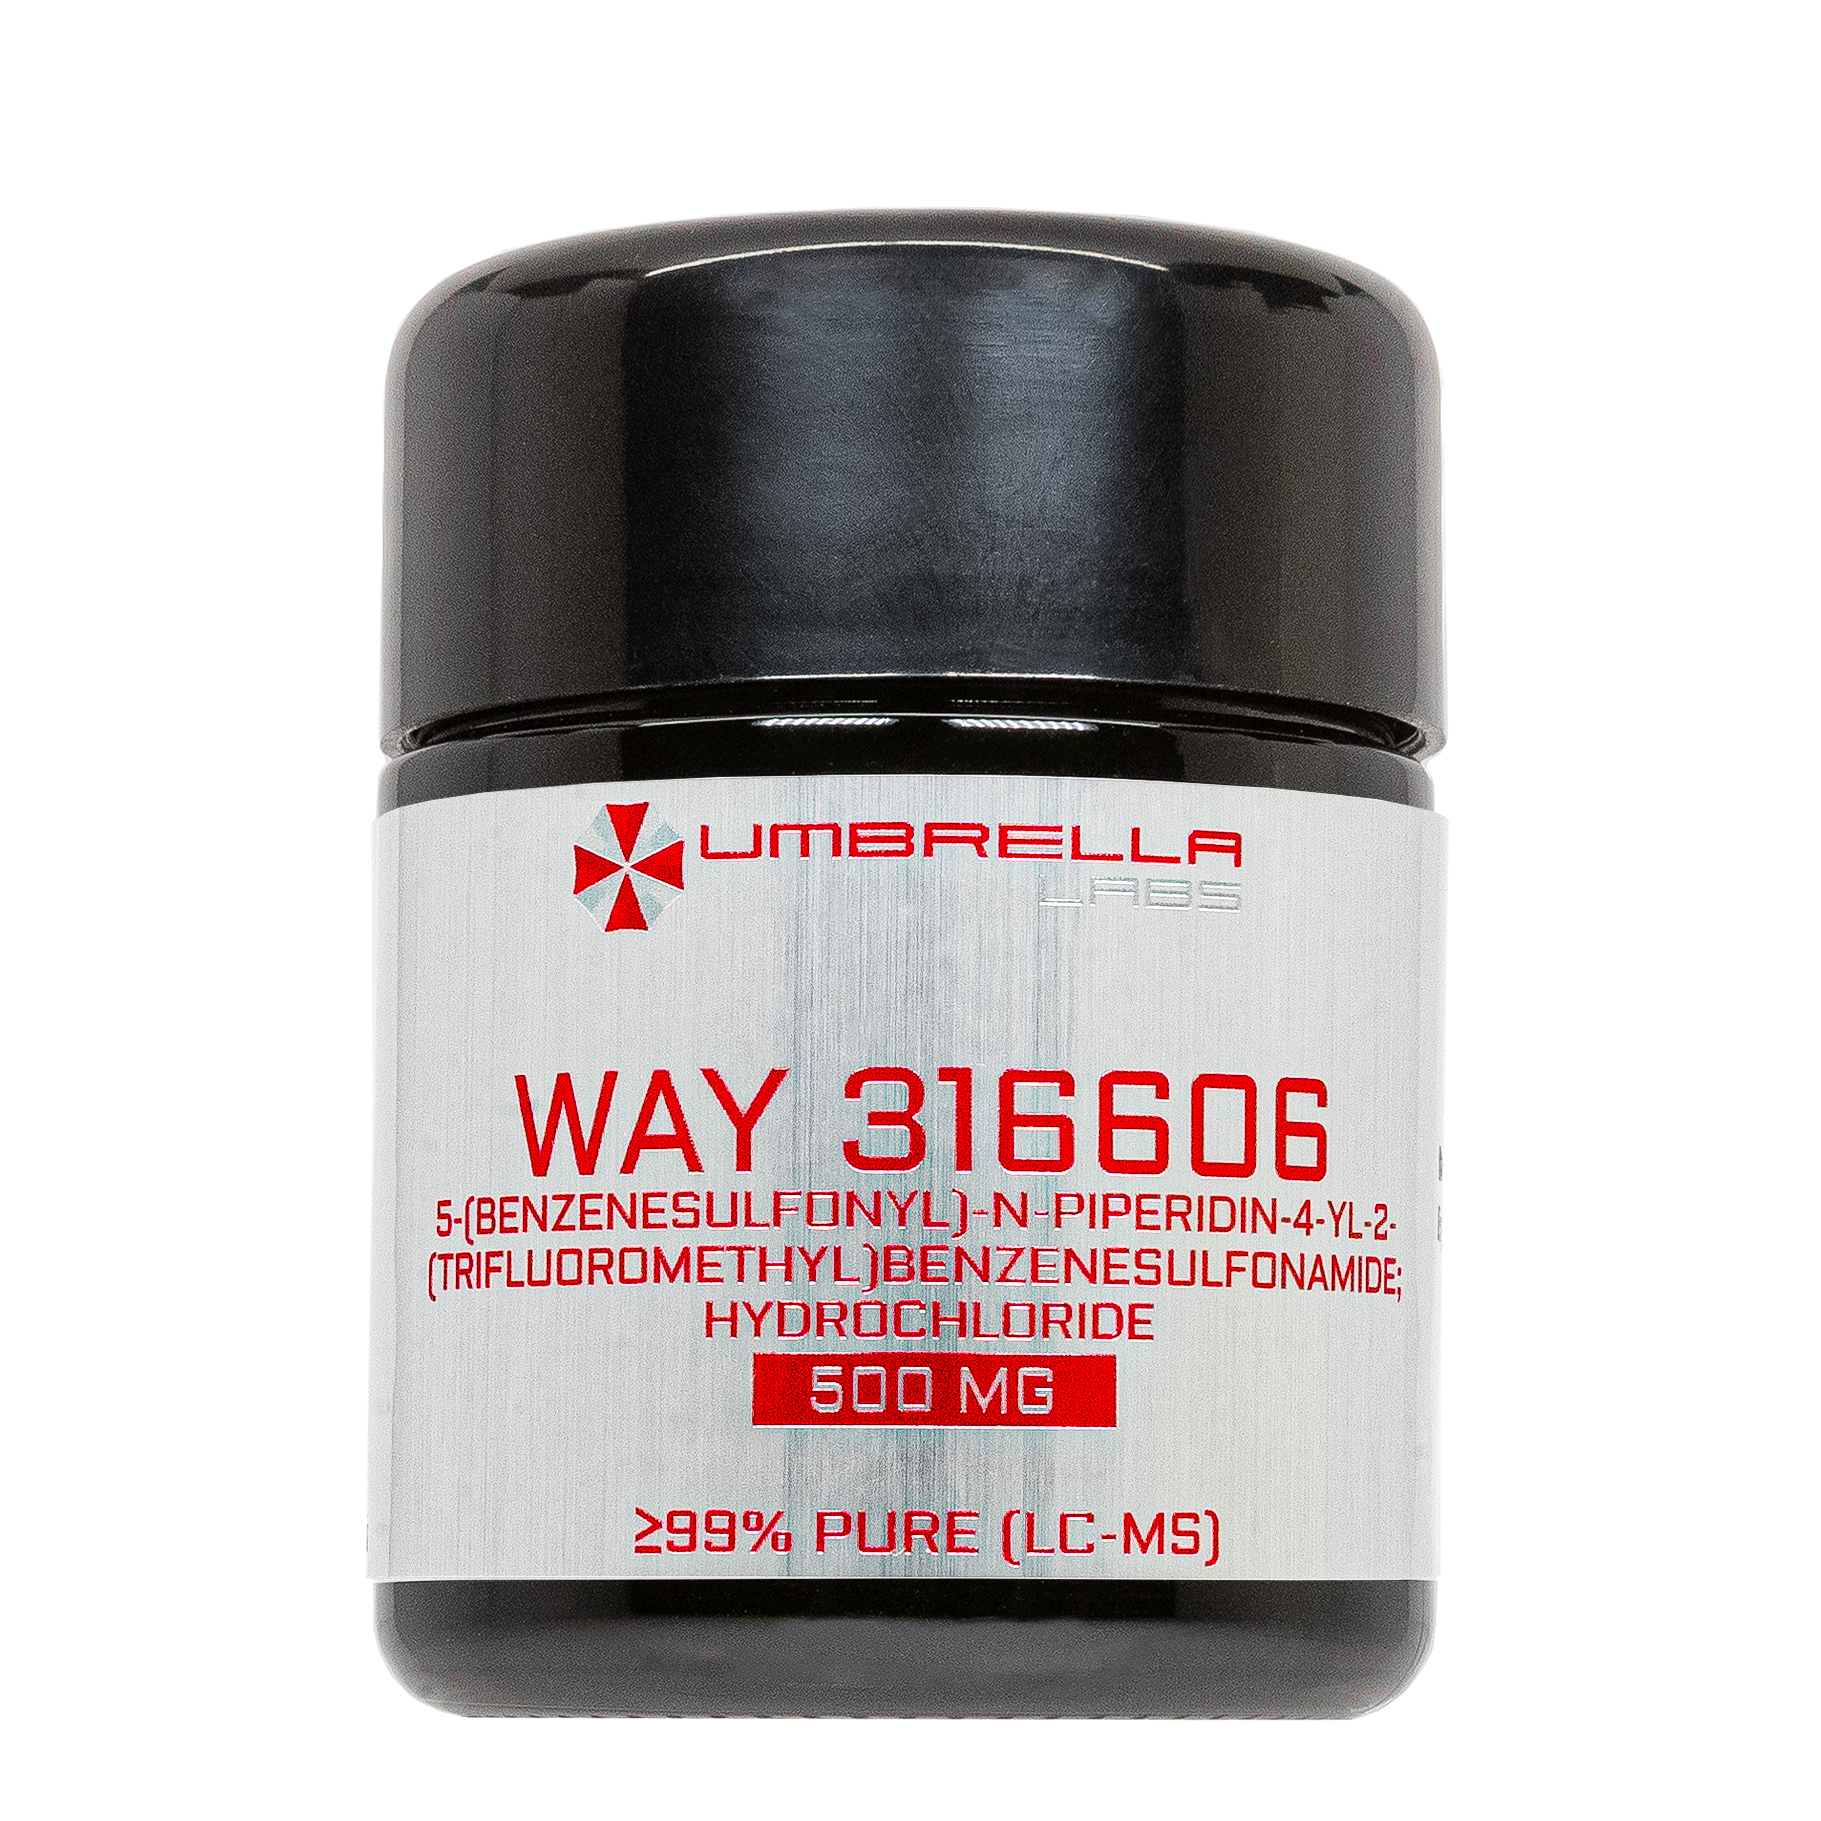 way 316606 (500 mg)